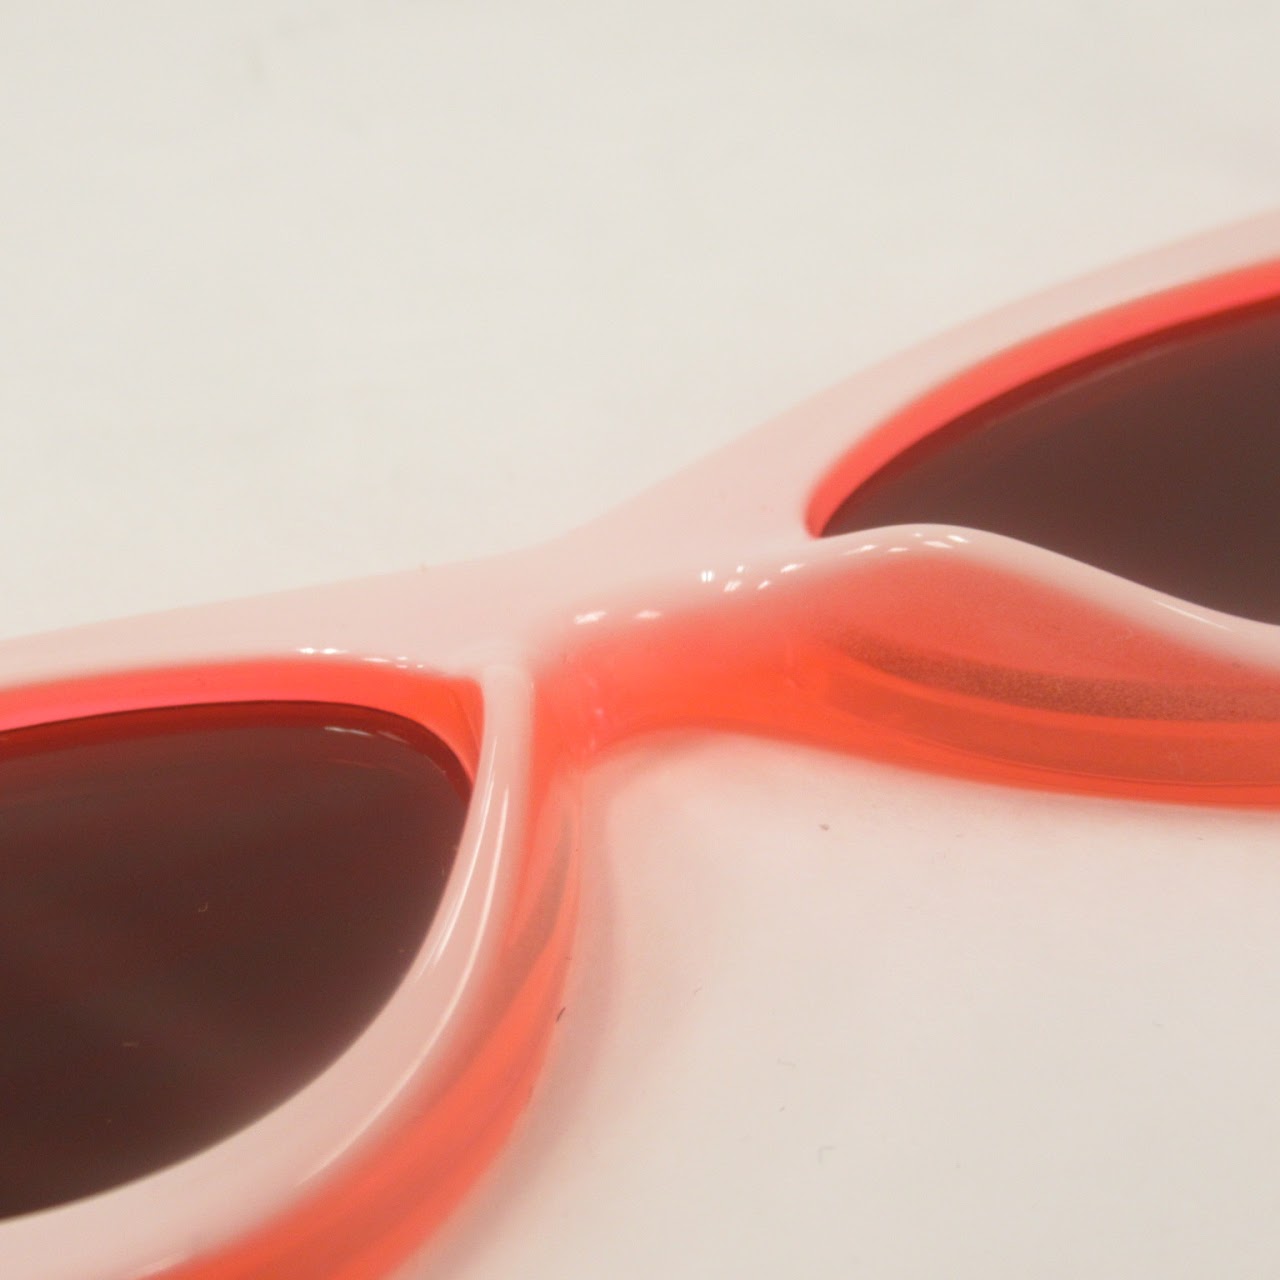 Adam Selman X Le Specs The Last Lolita Sunglasses